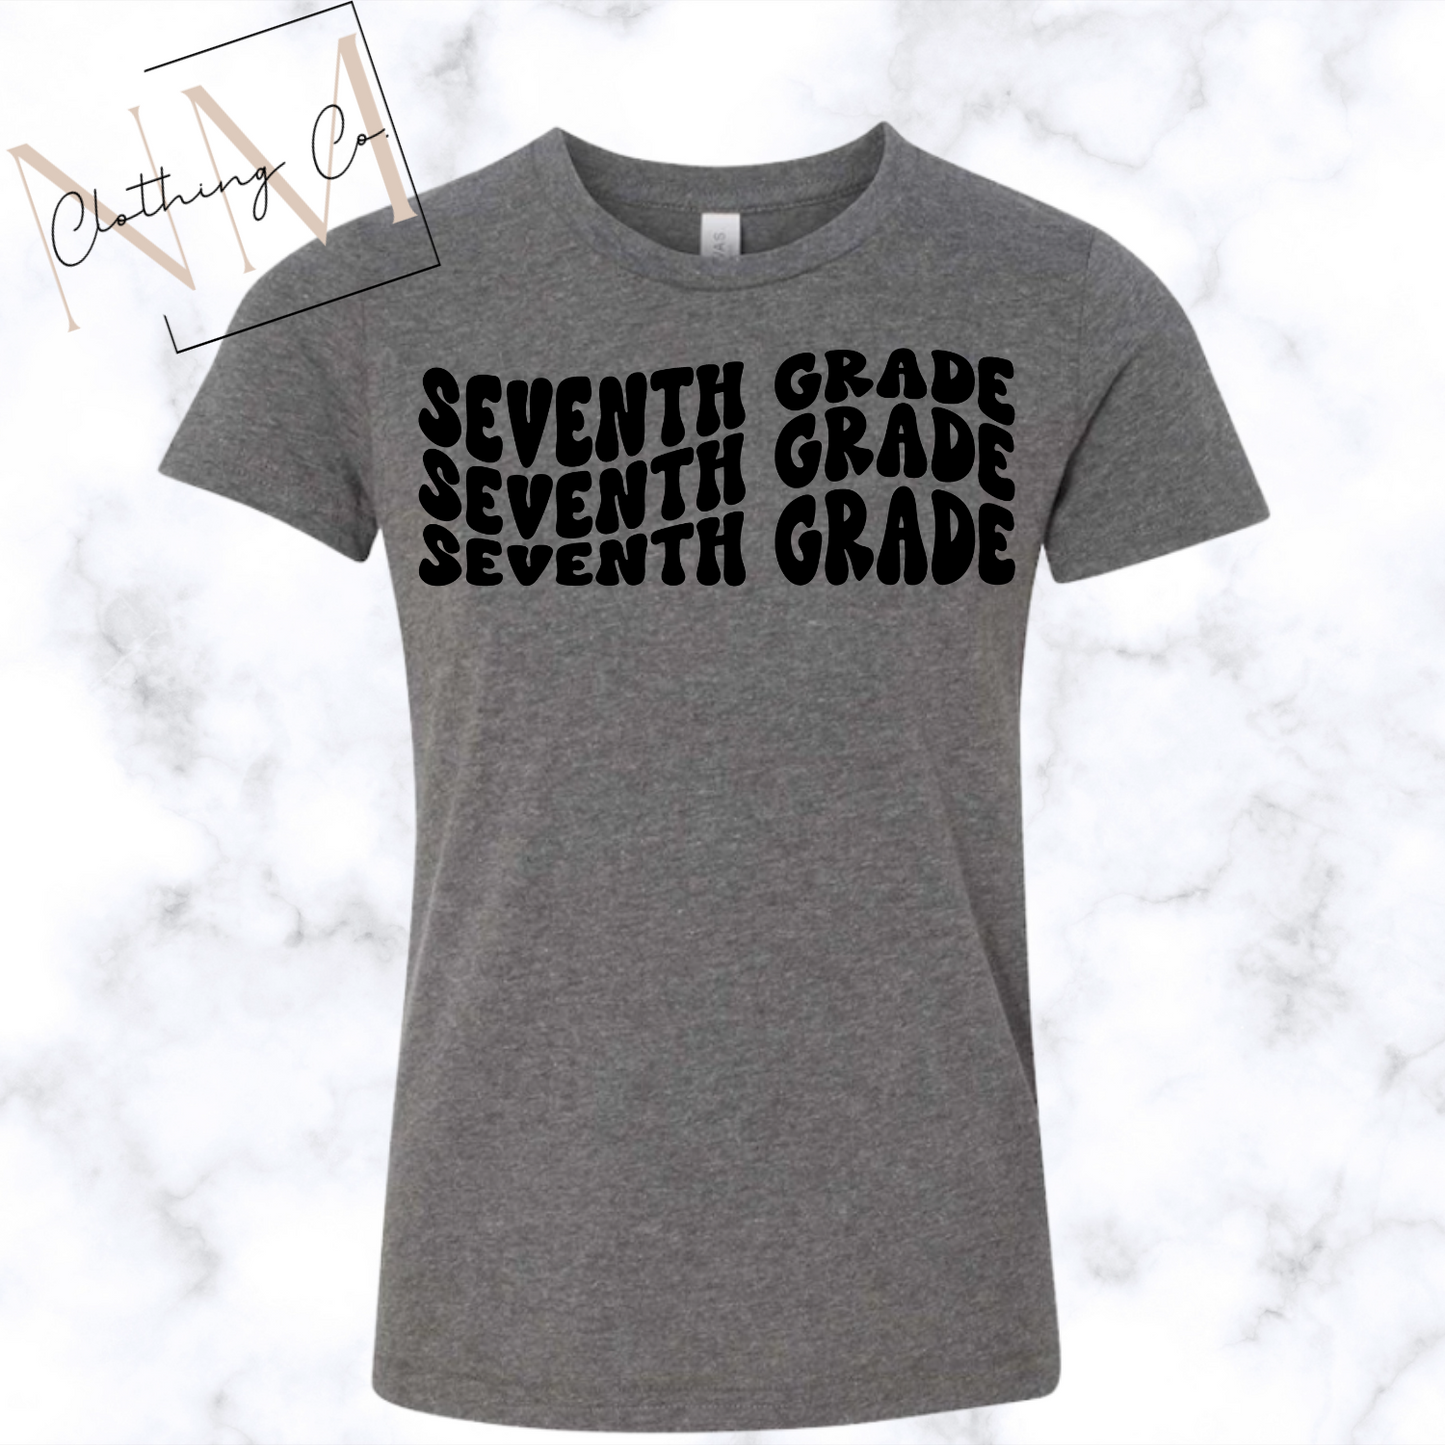 Seventh Grade Groovy Wave